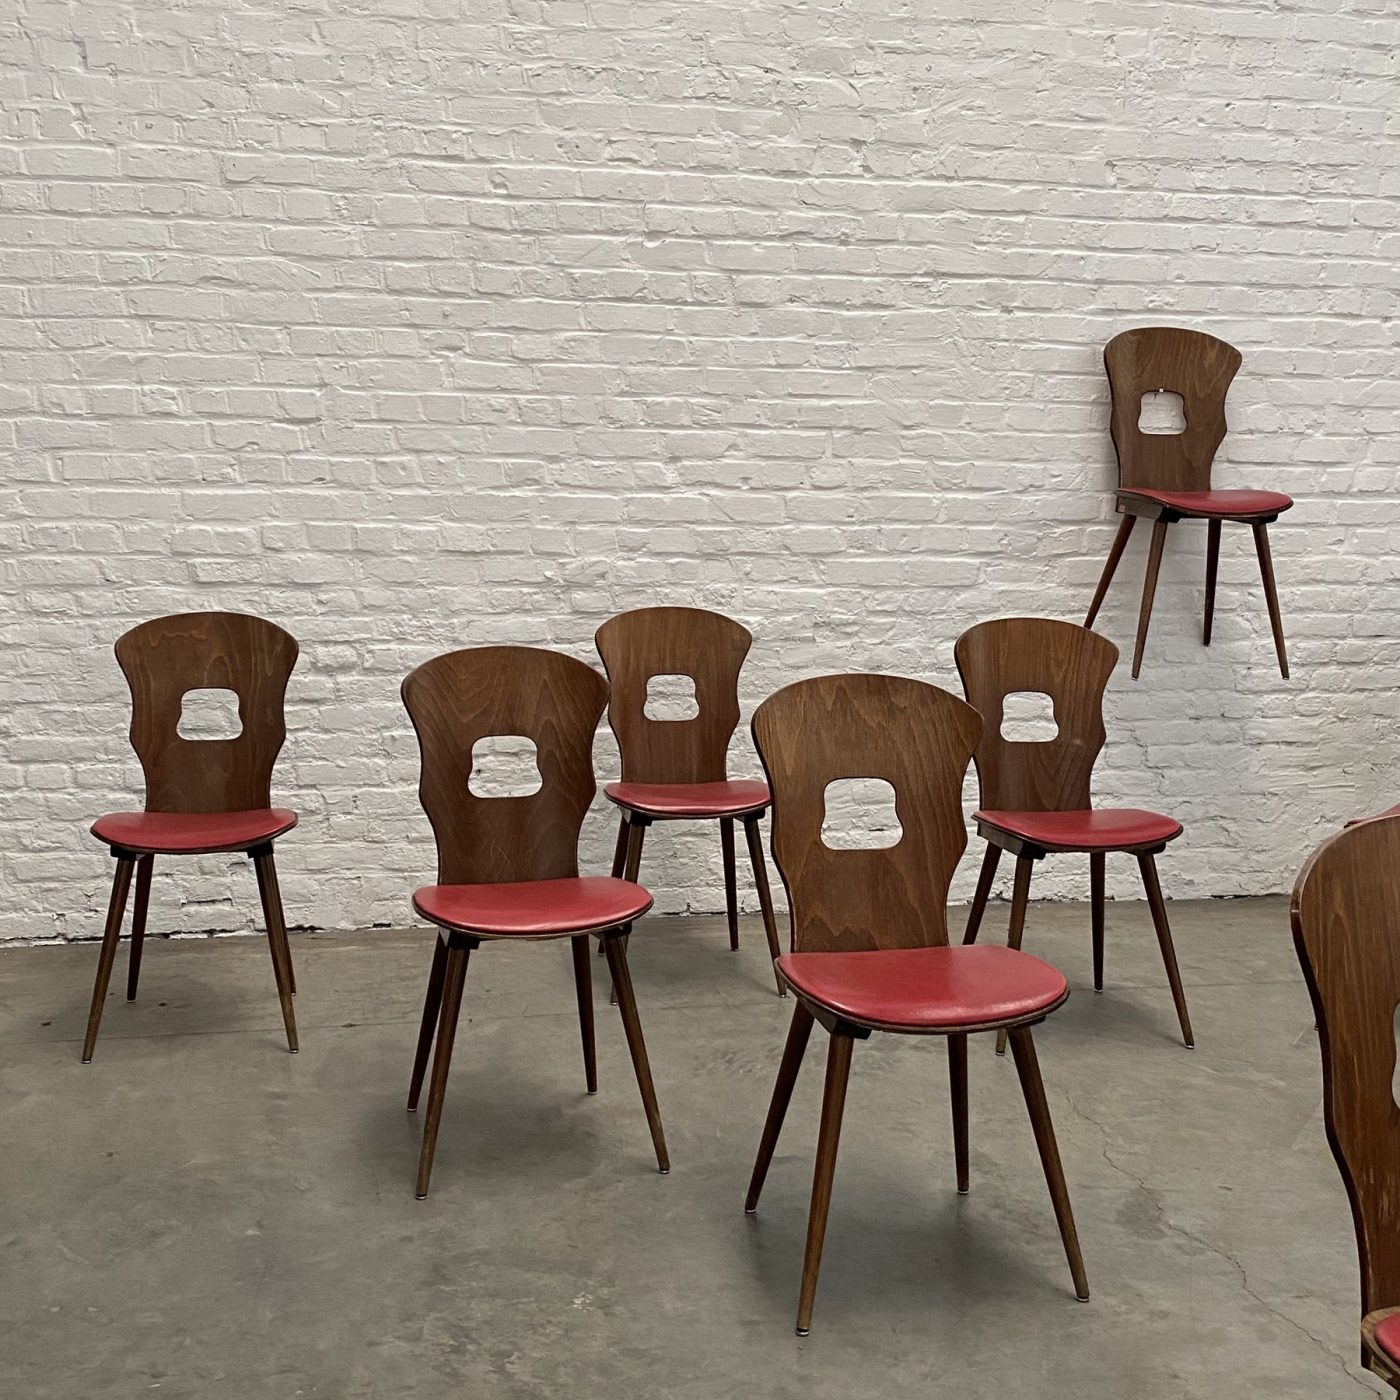 objet-vagabond-baumann-chairs0006